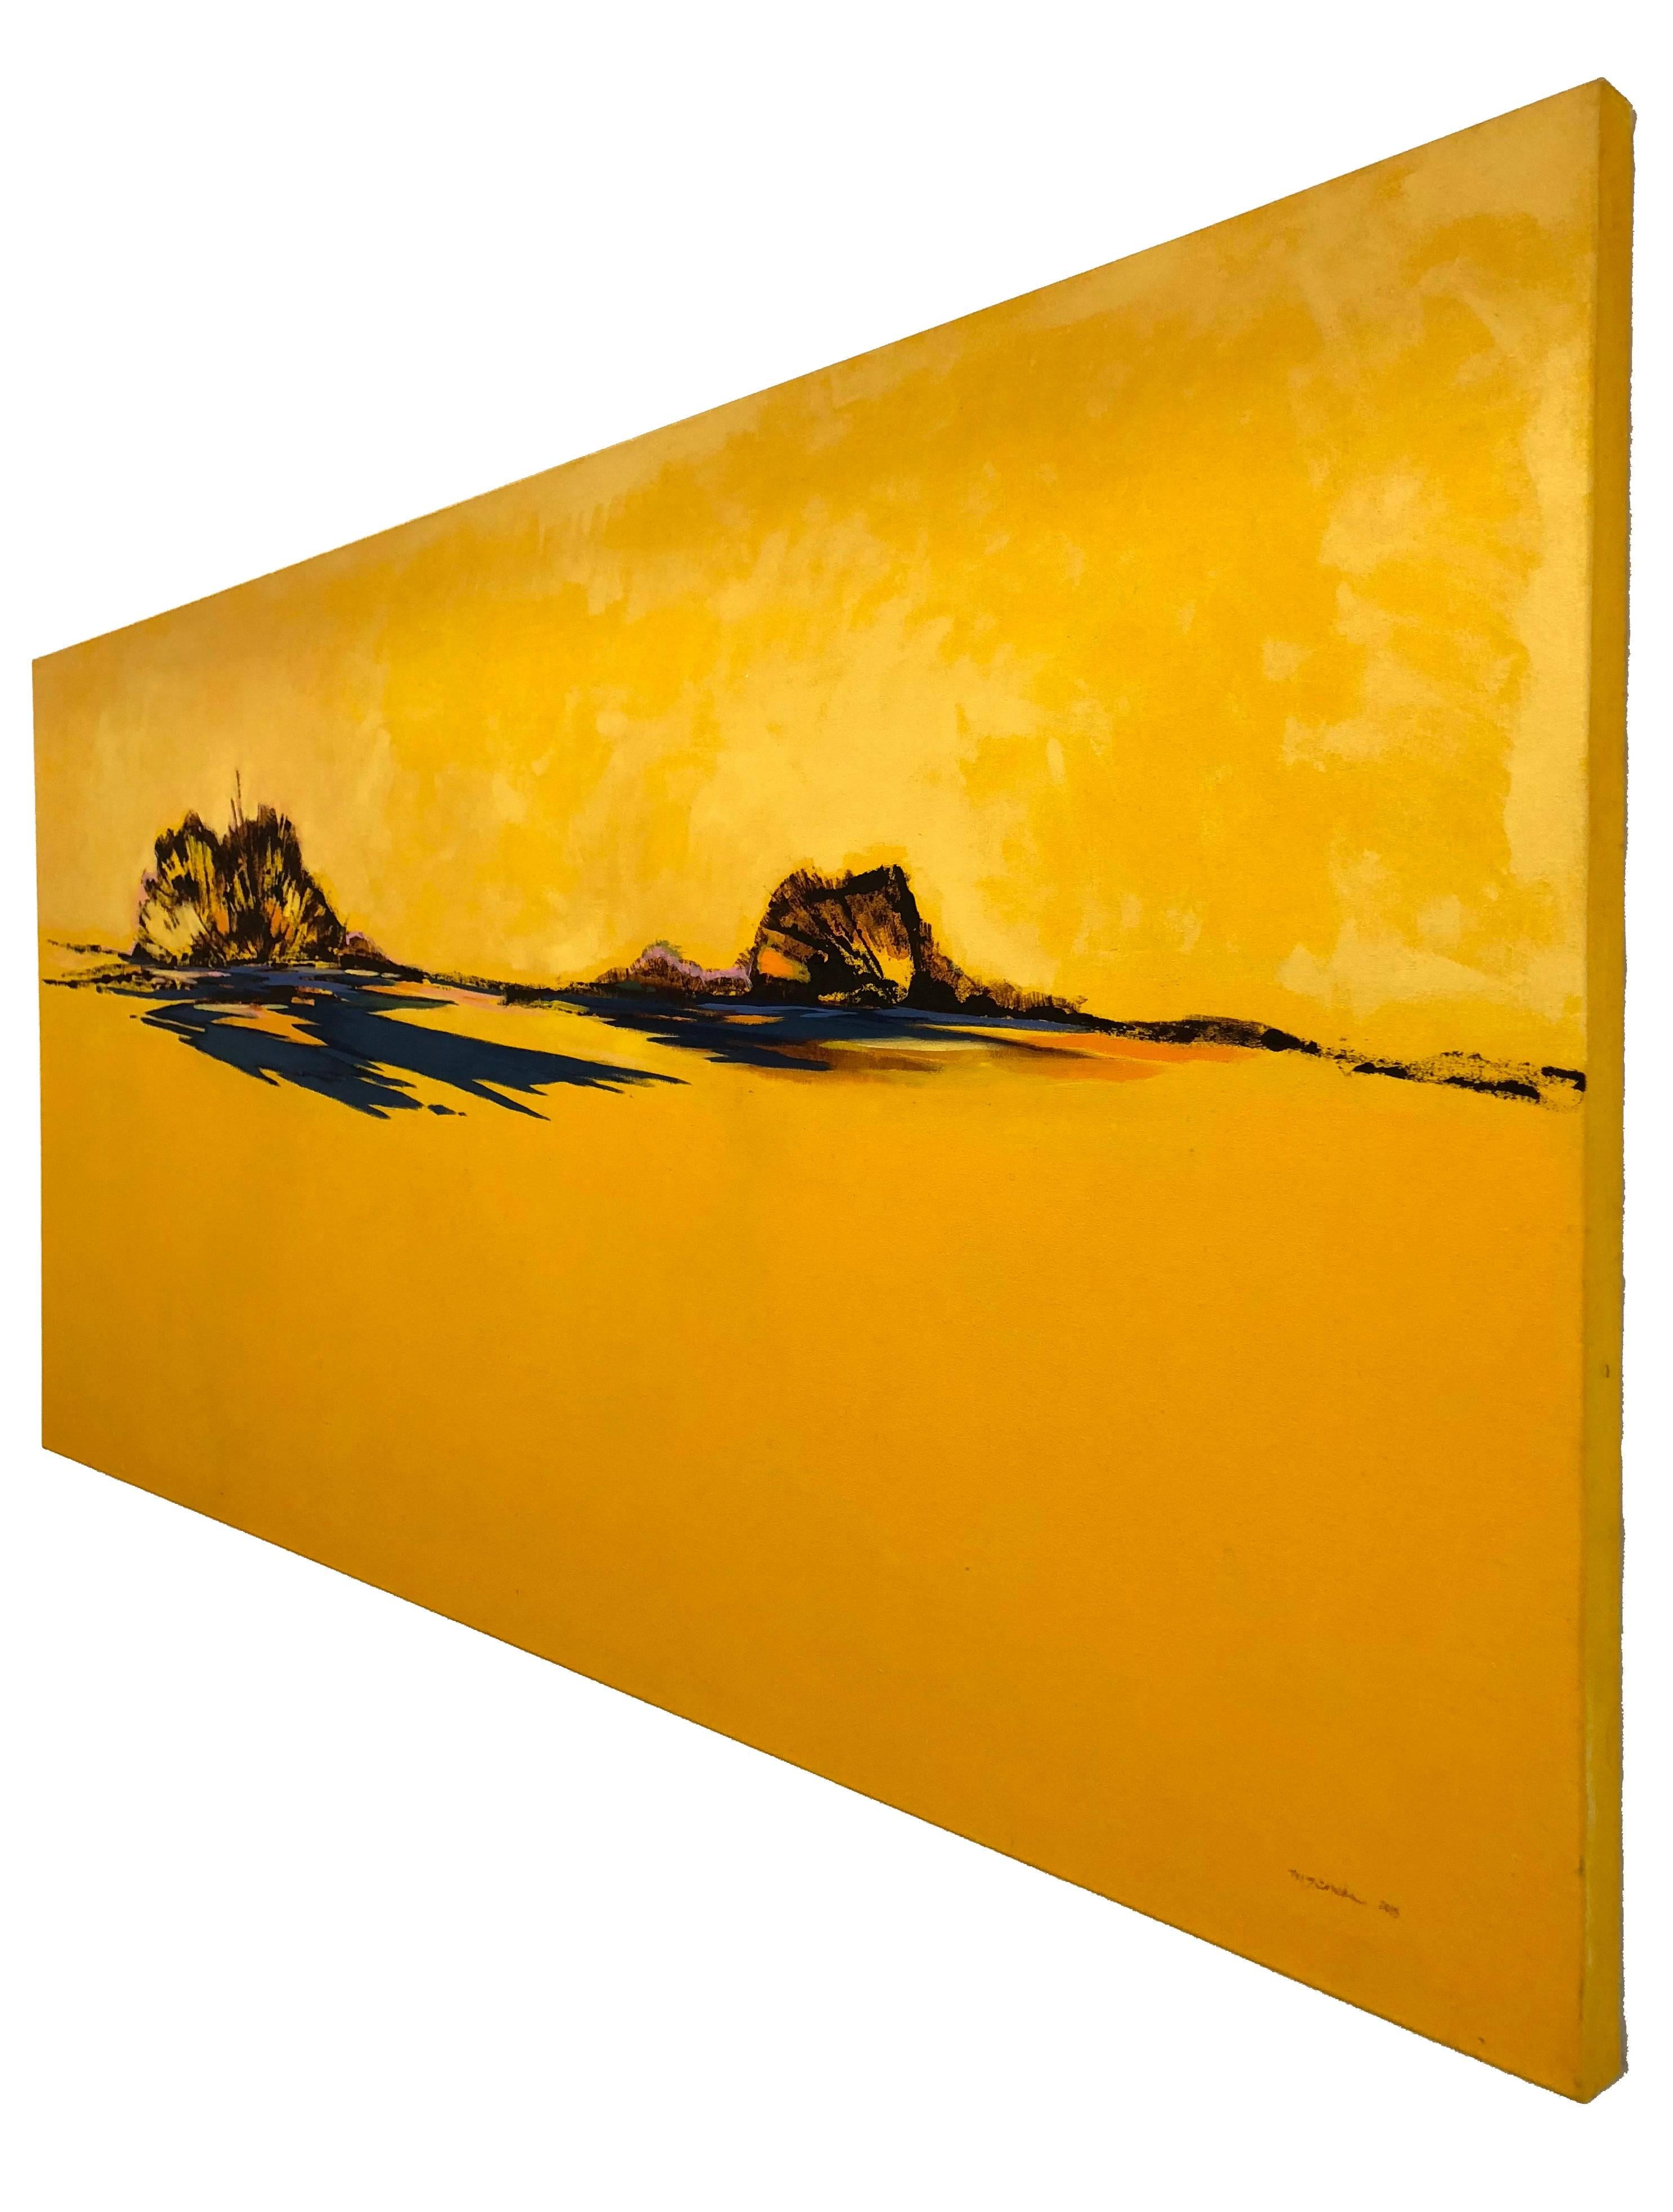 Sunshine Again, horizontales gelbes abstraktes Landschaftsgemälde, Öl auf Leinwand (Abstrakt), Painting, von Maria Jose Concha